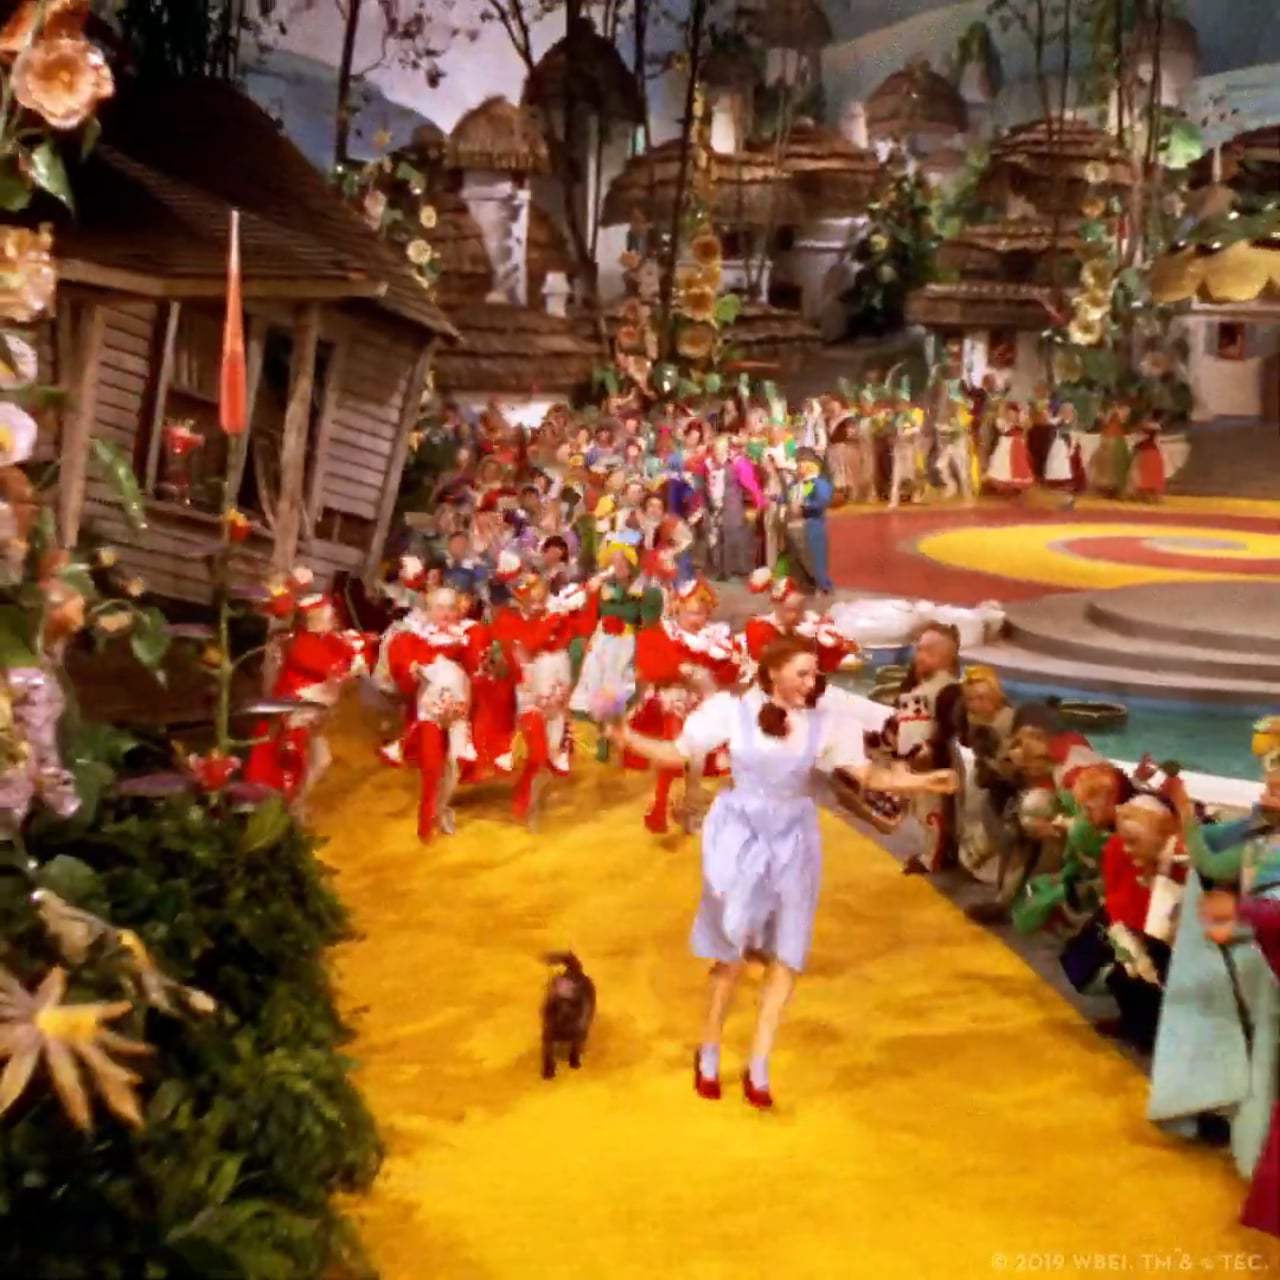 The Wizard Of Oz TV Spot - 4K Announcement (1939)